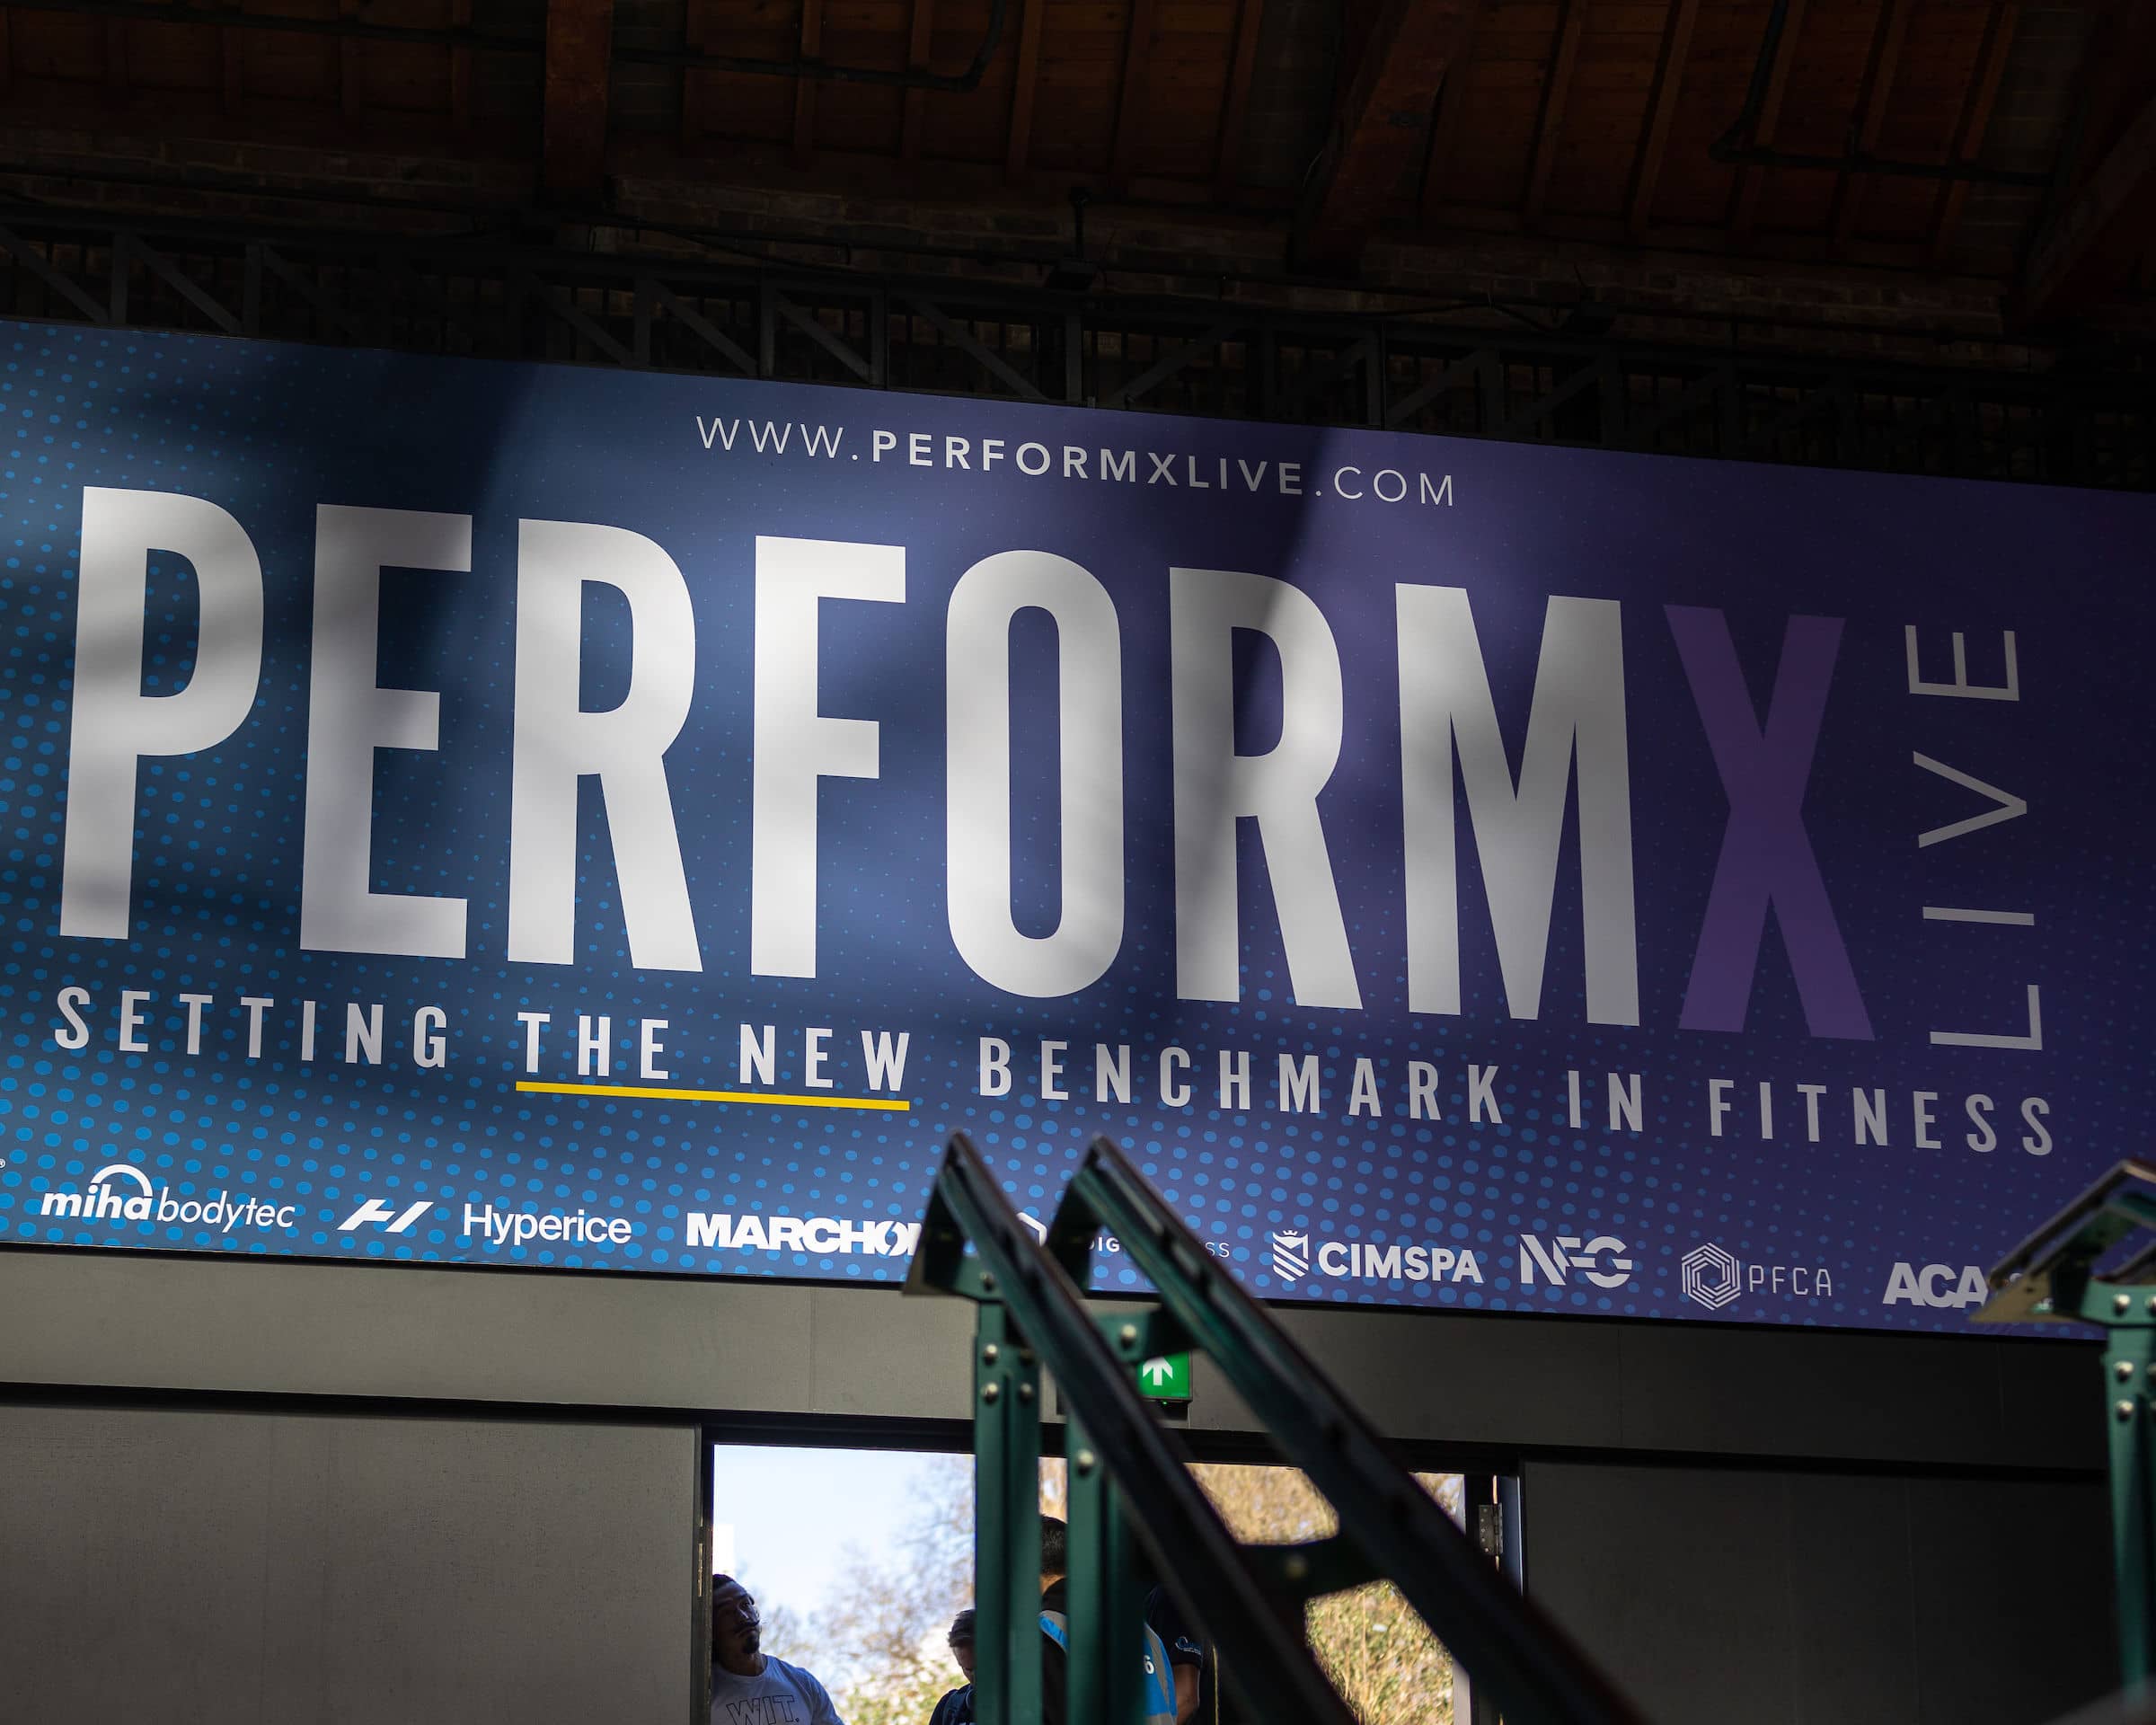 Performx live banner